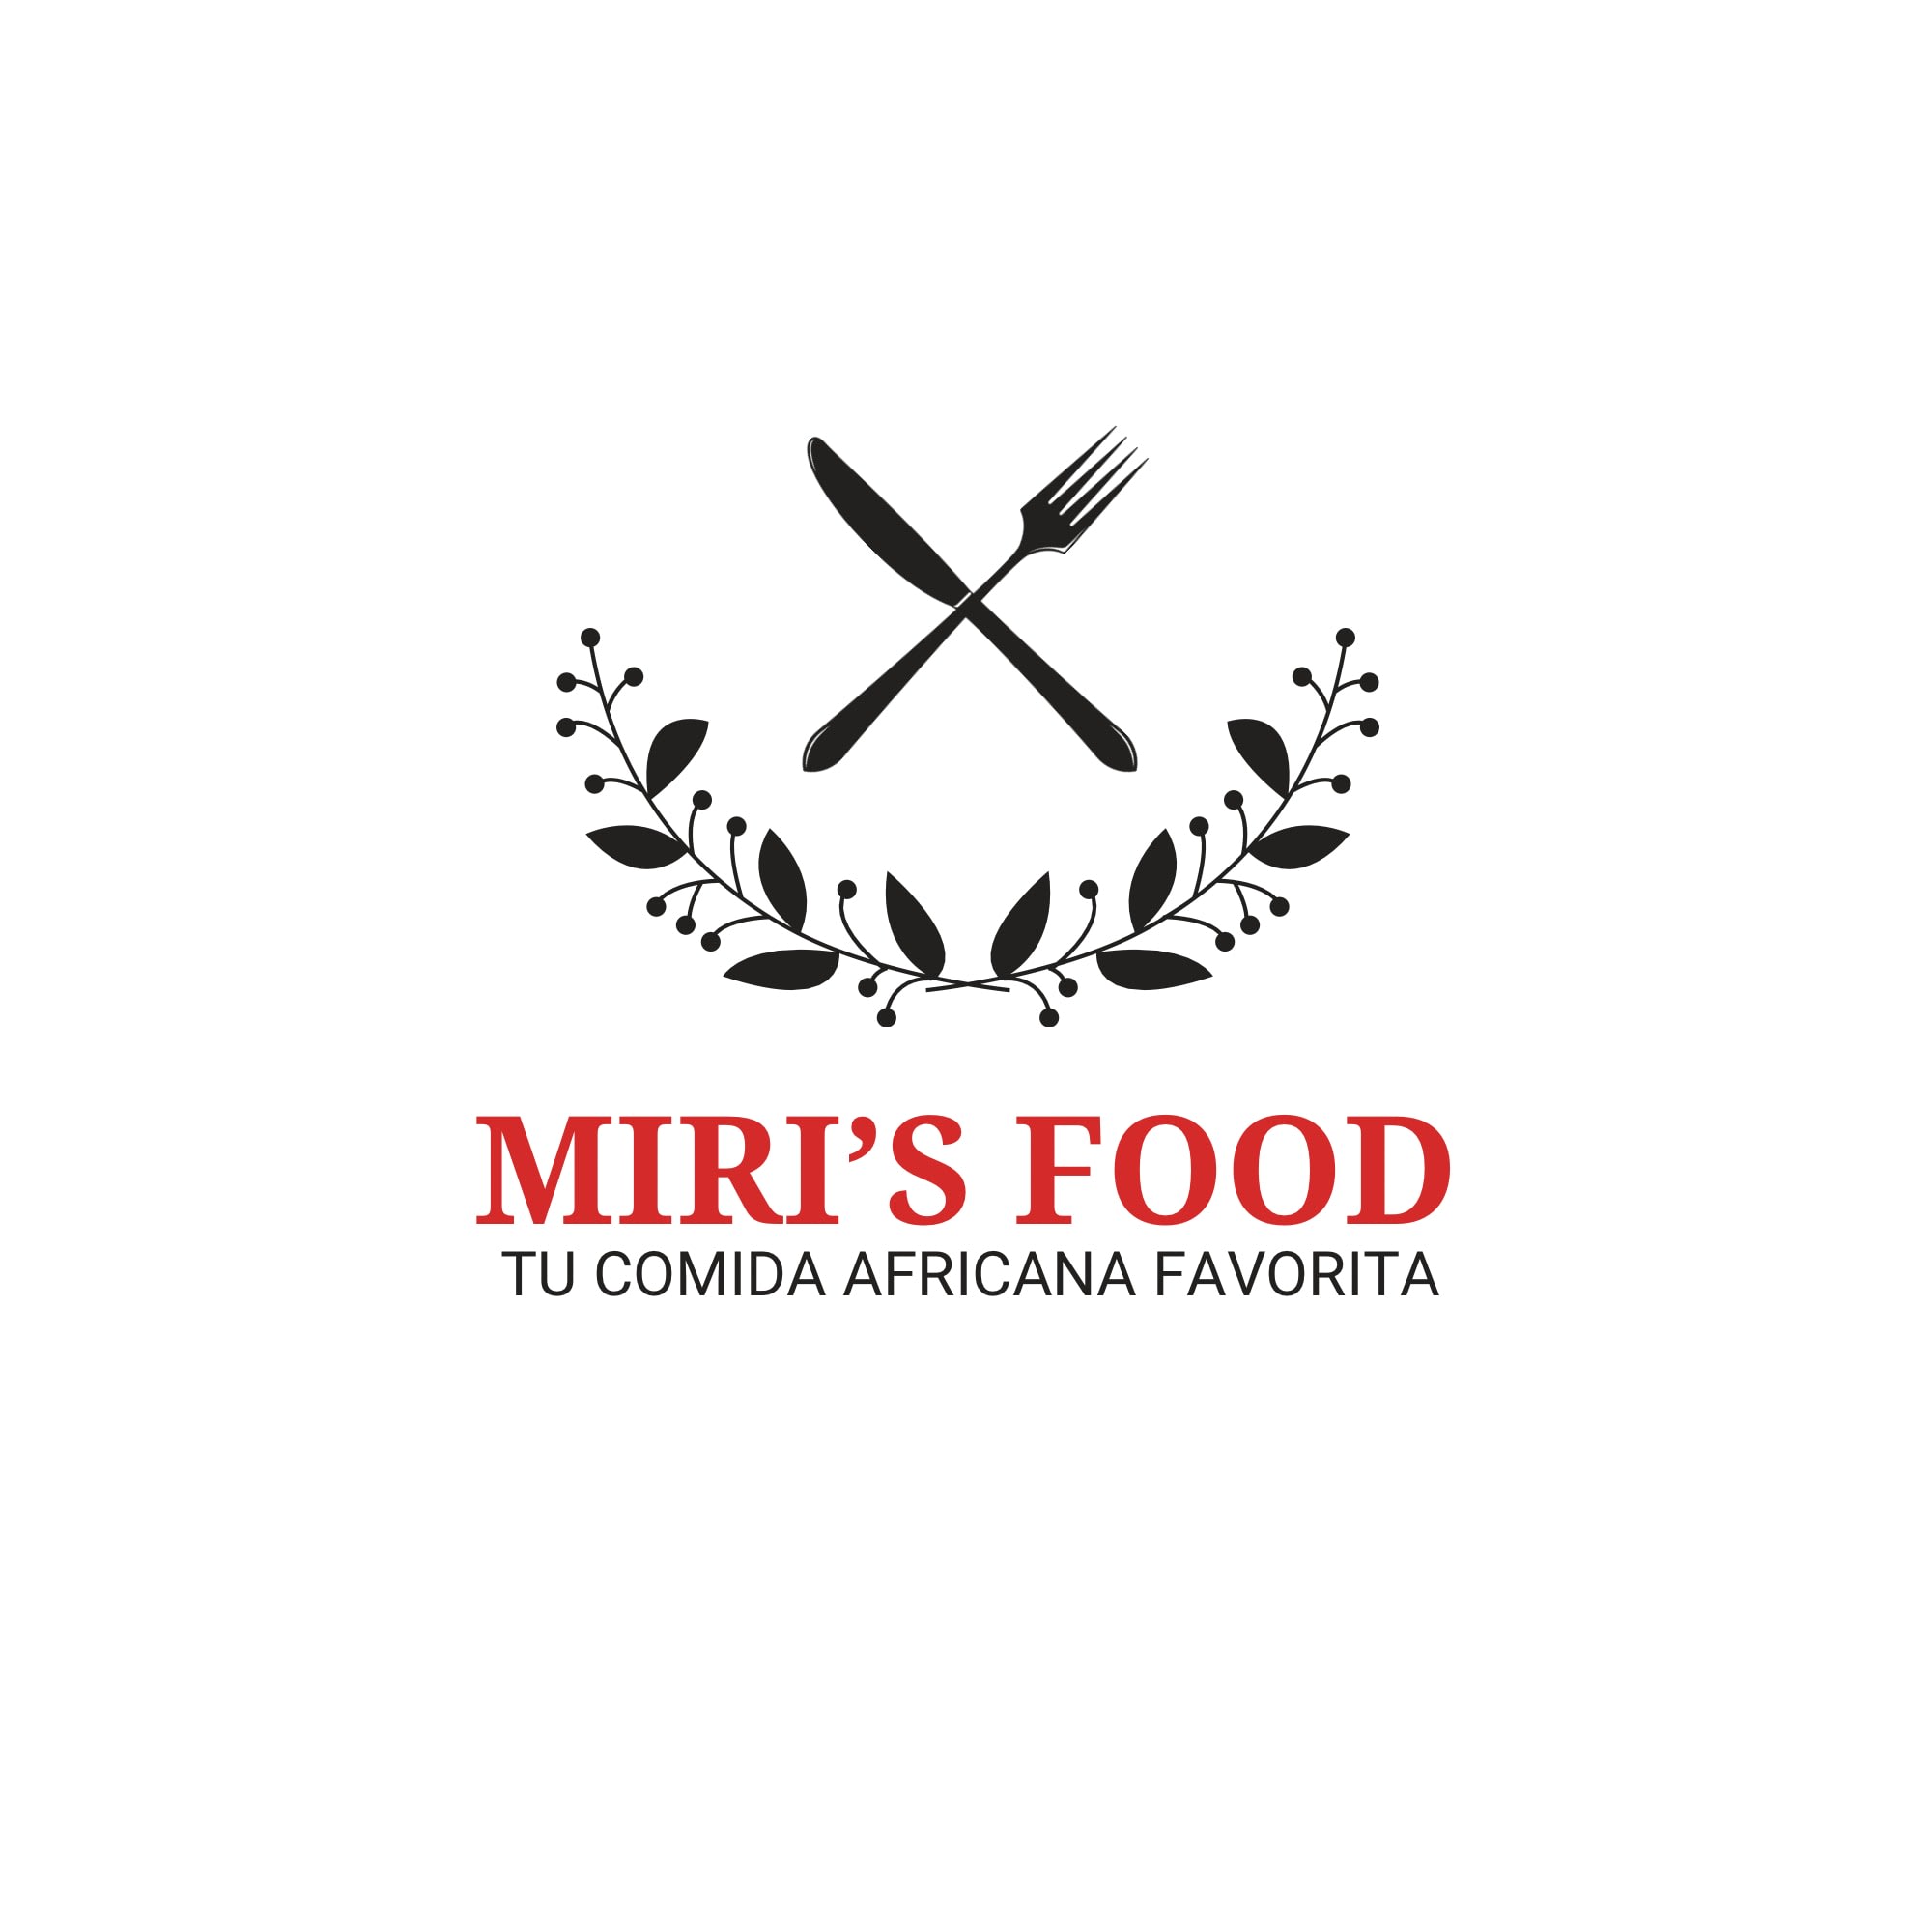 Miri’s Food